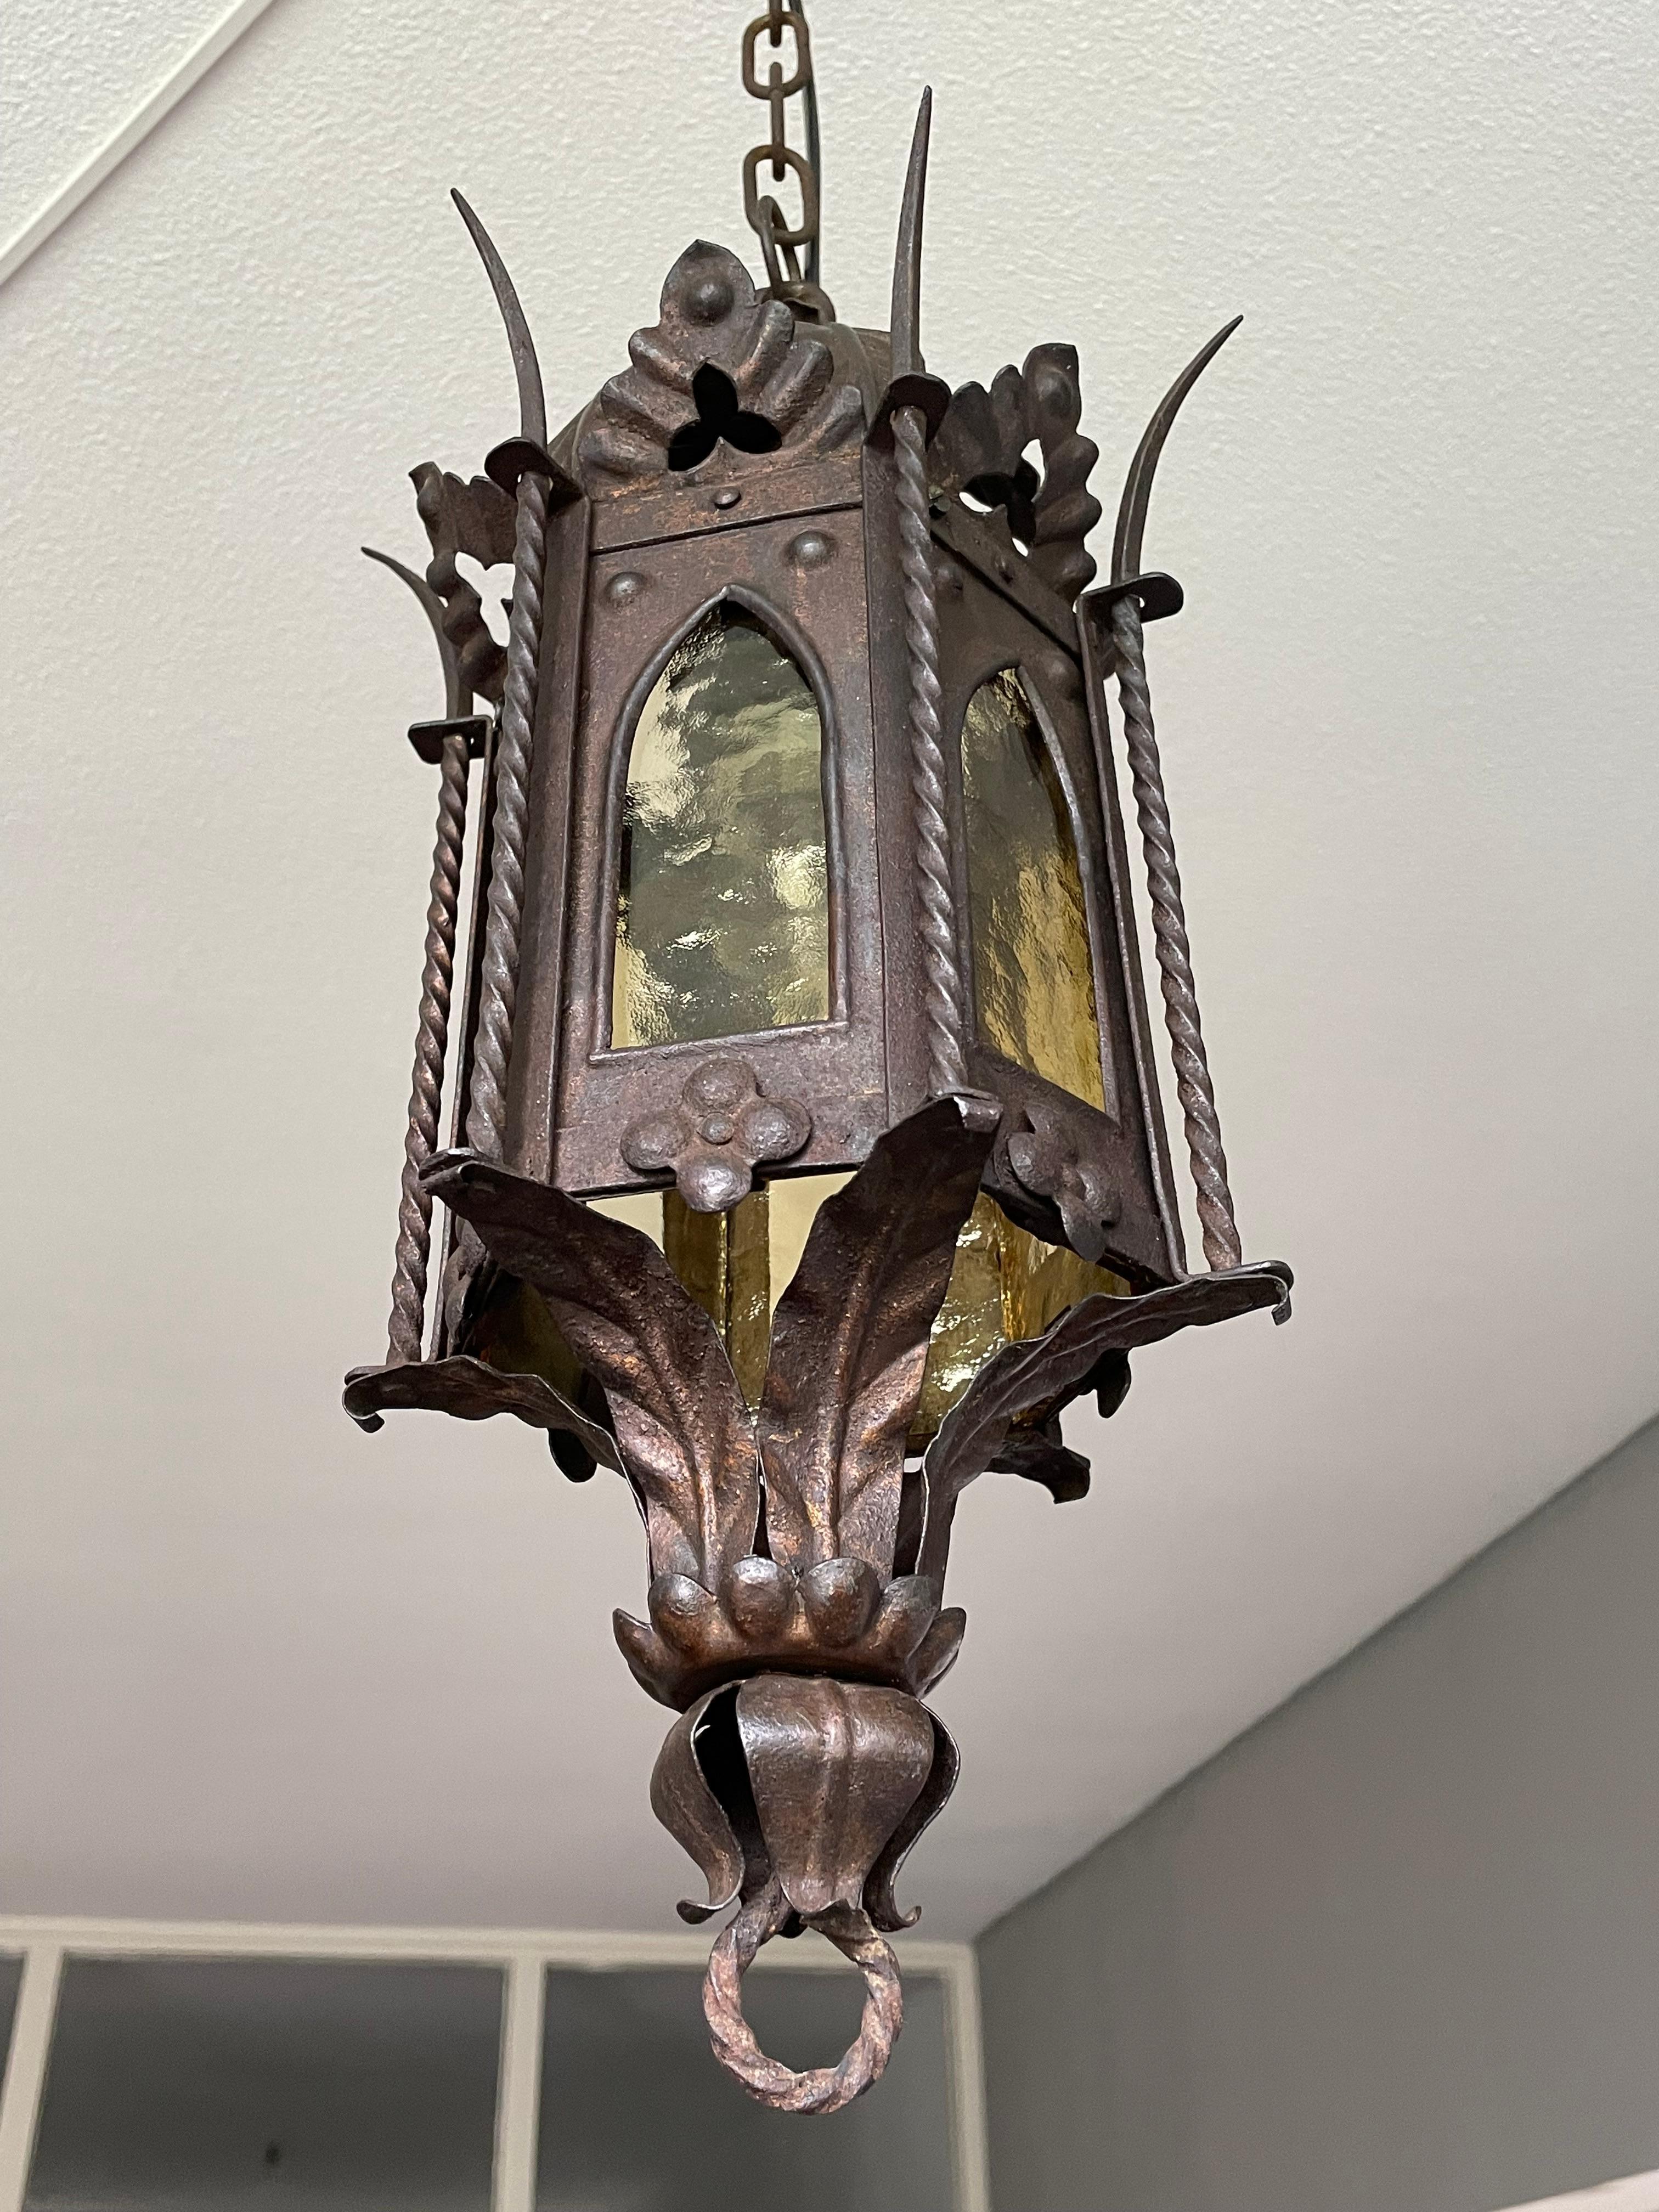 medieval lantern